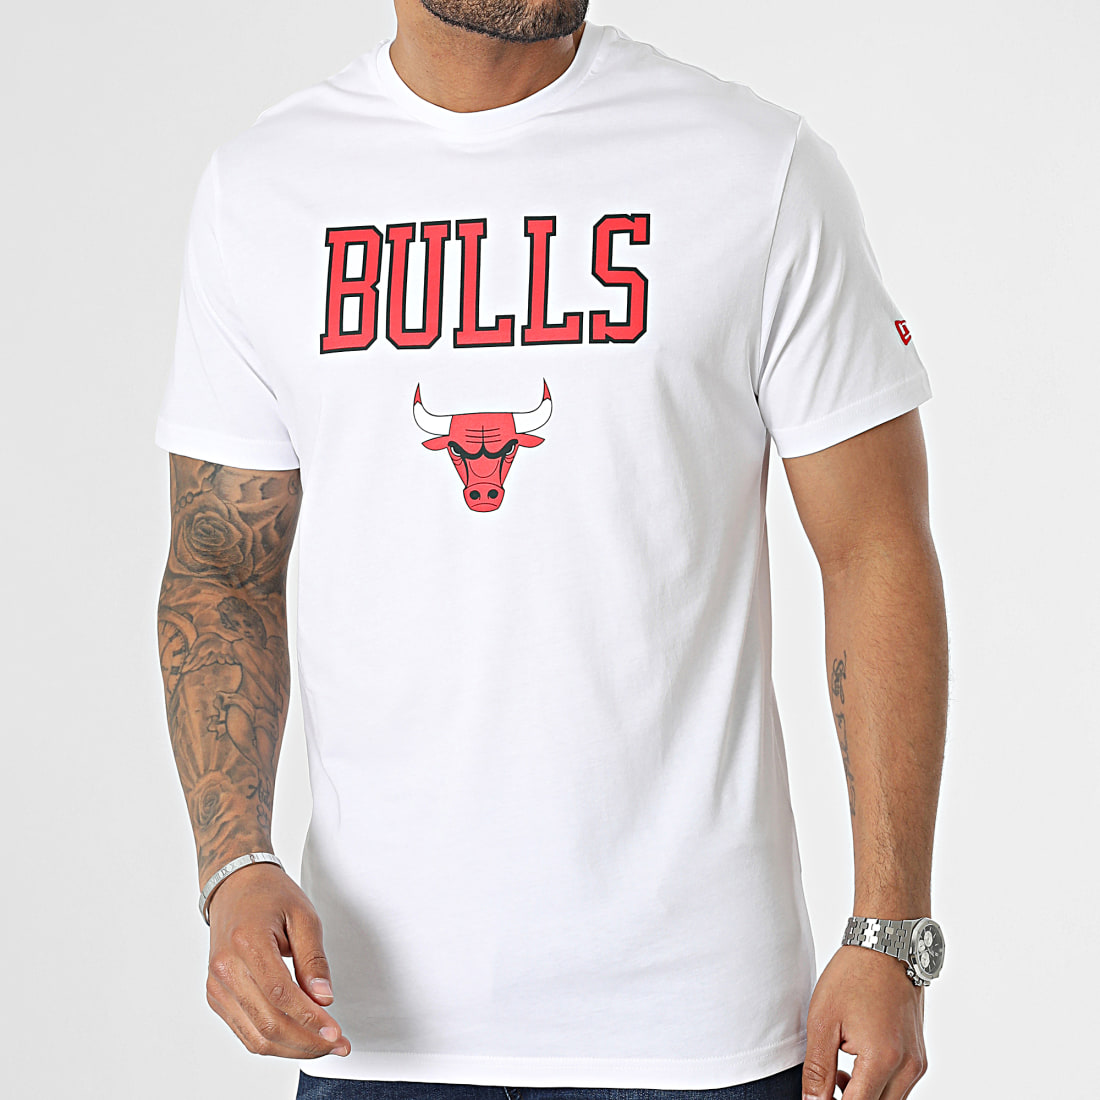 New Era Chicago Bulls NBA Sky T-shirt Black 60357106